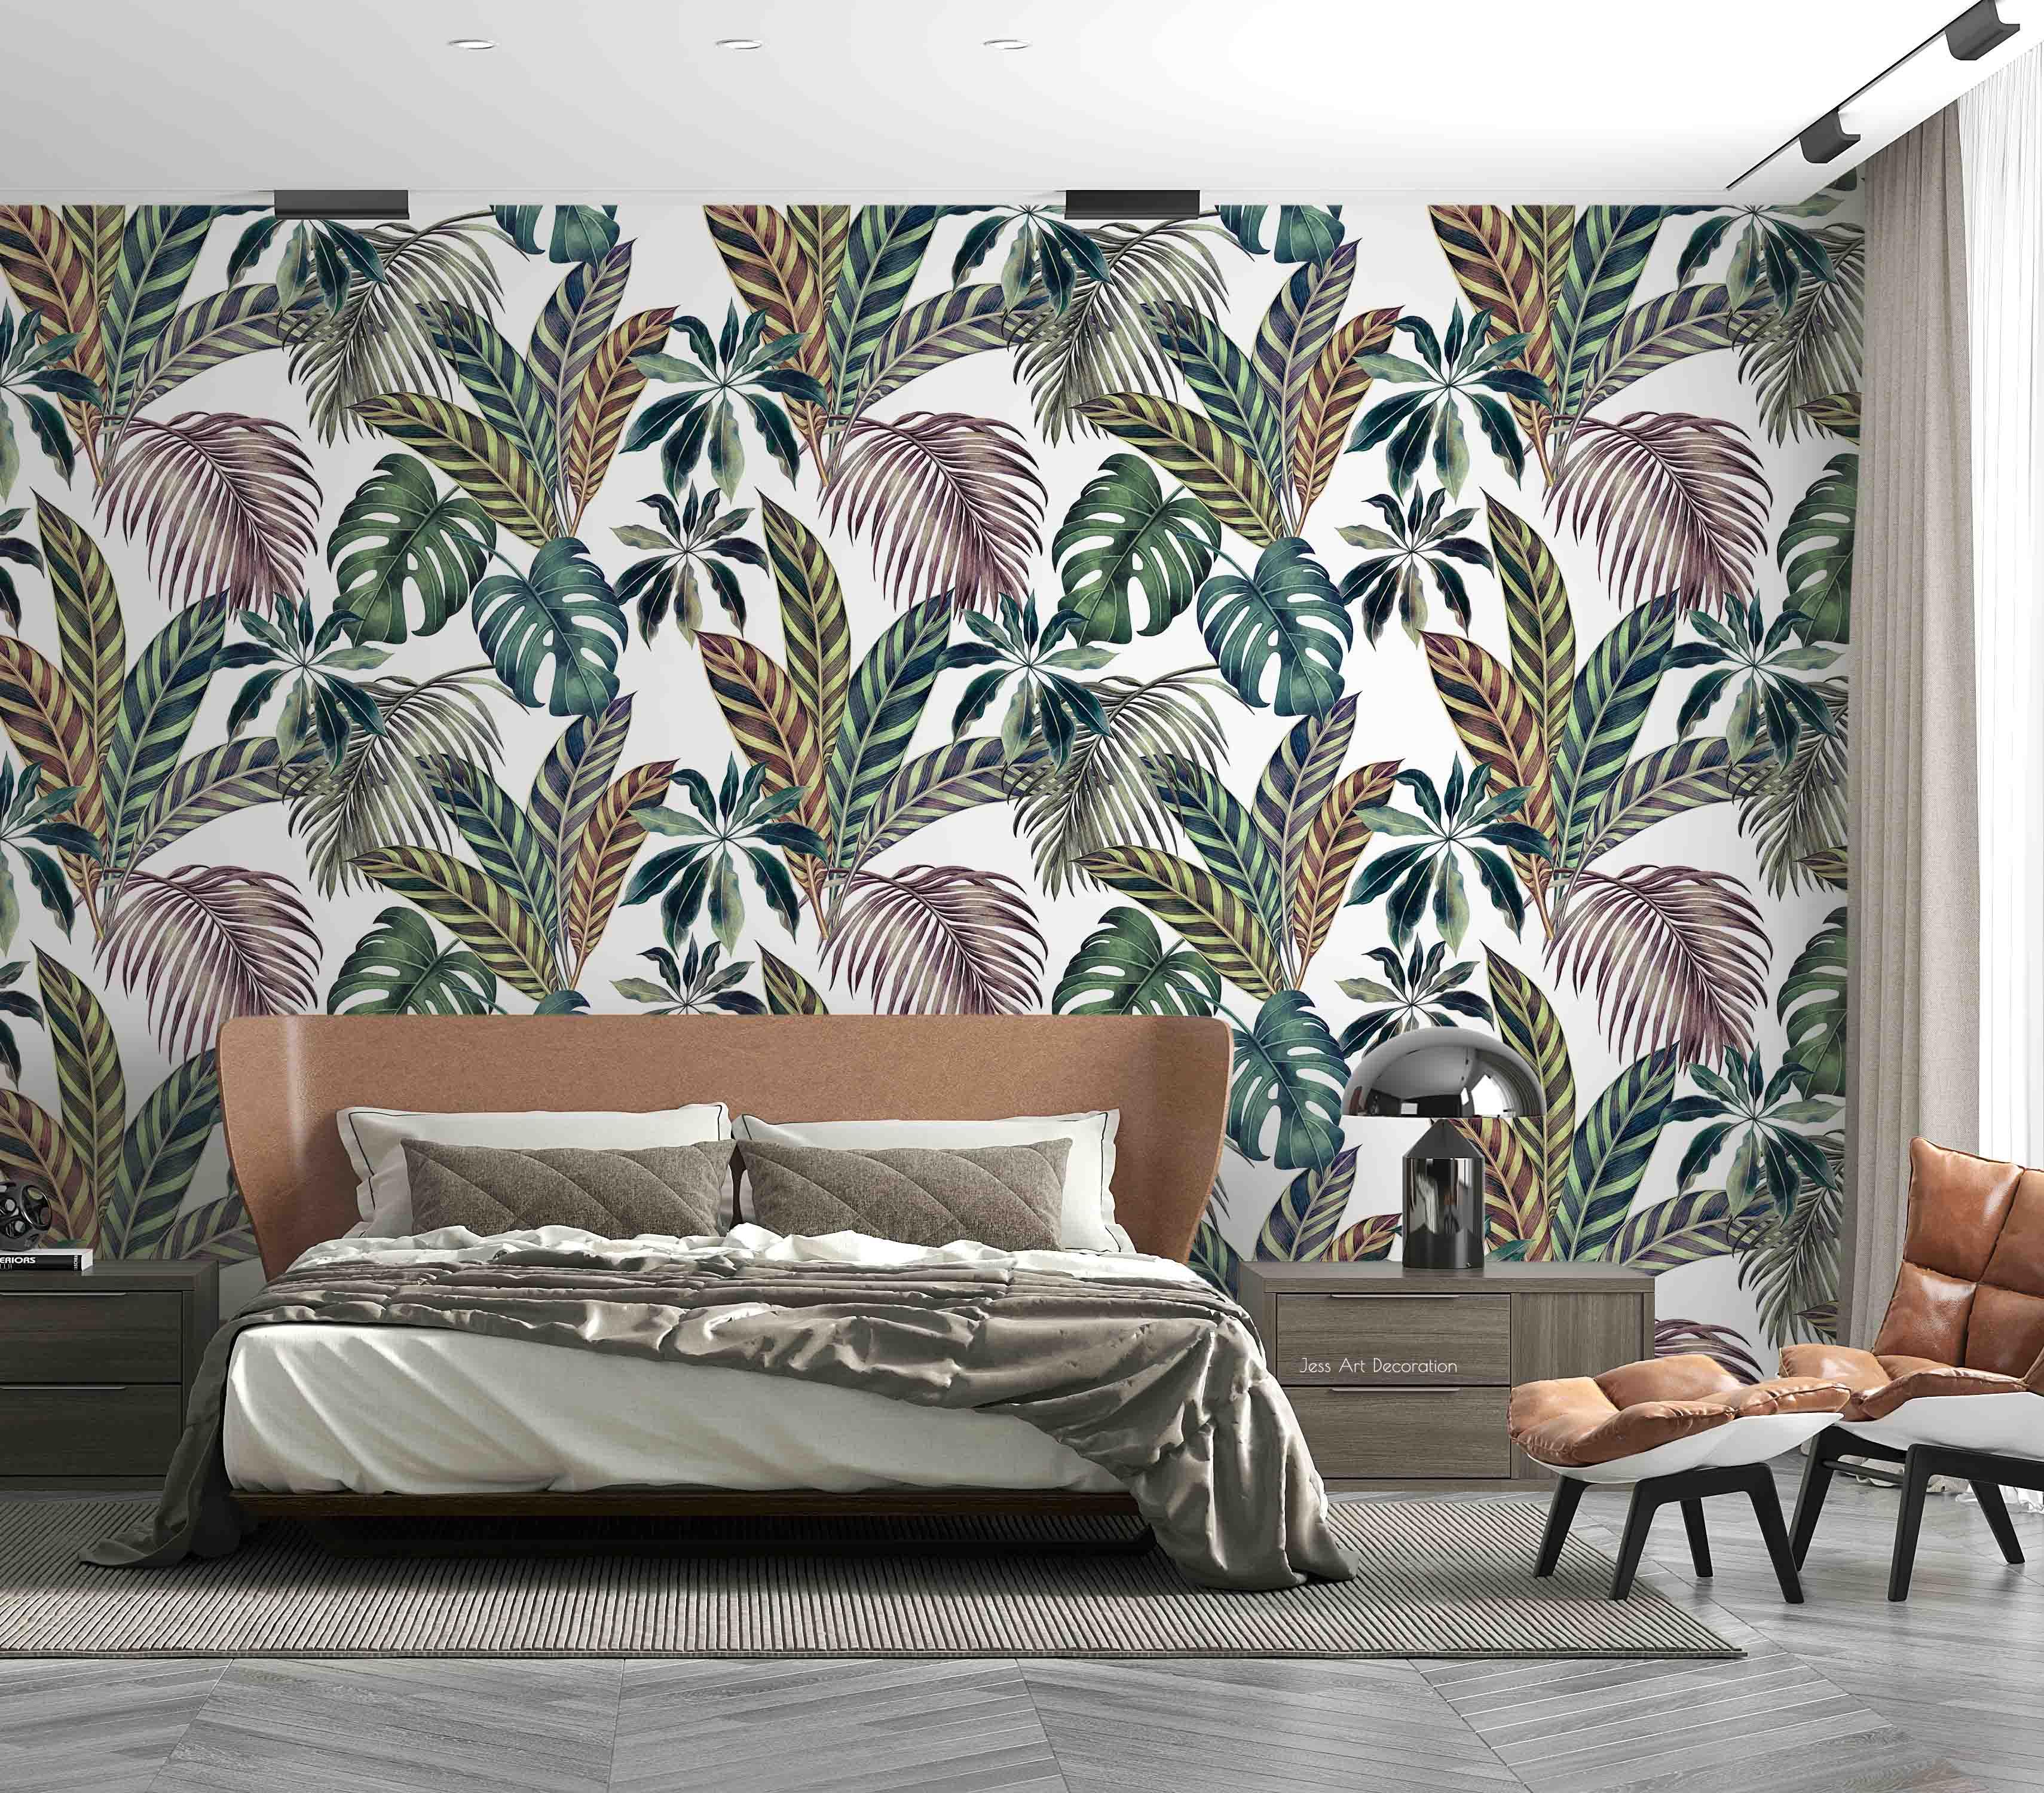 3D Vintage Tropical Plants Leaves Pattern Wall Mural Wallpaper GD 3287- Jess Art Decoration